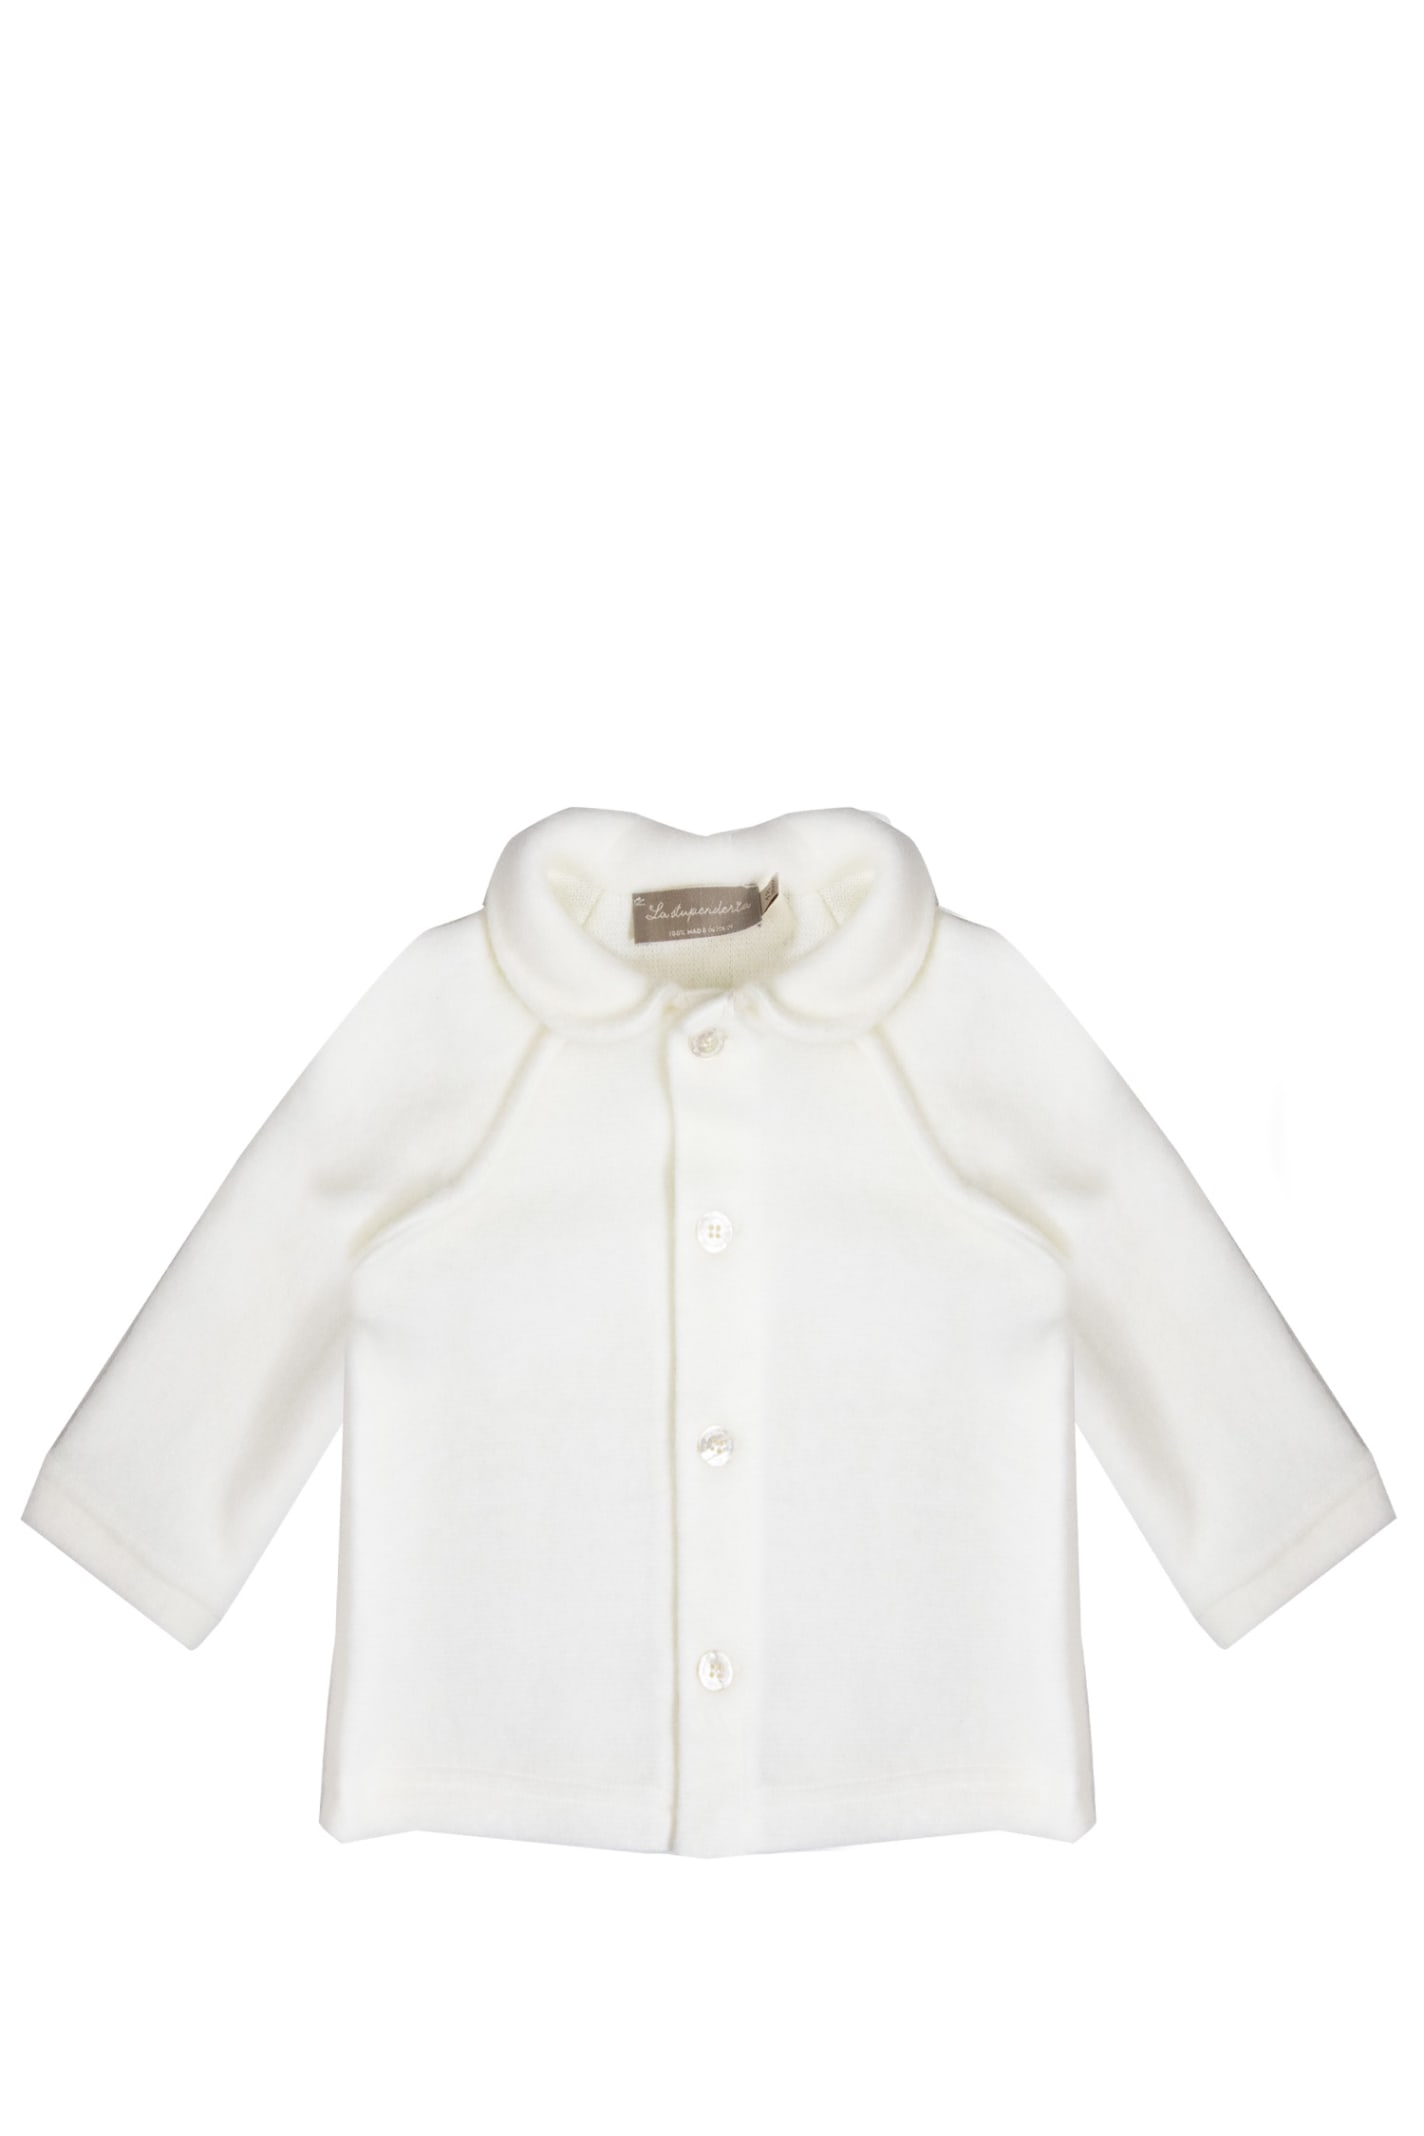 La Stupenderia Kids' Cotton Jacket In White